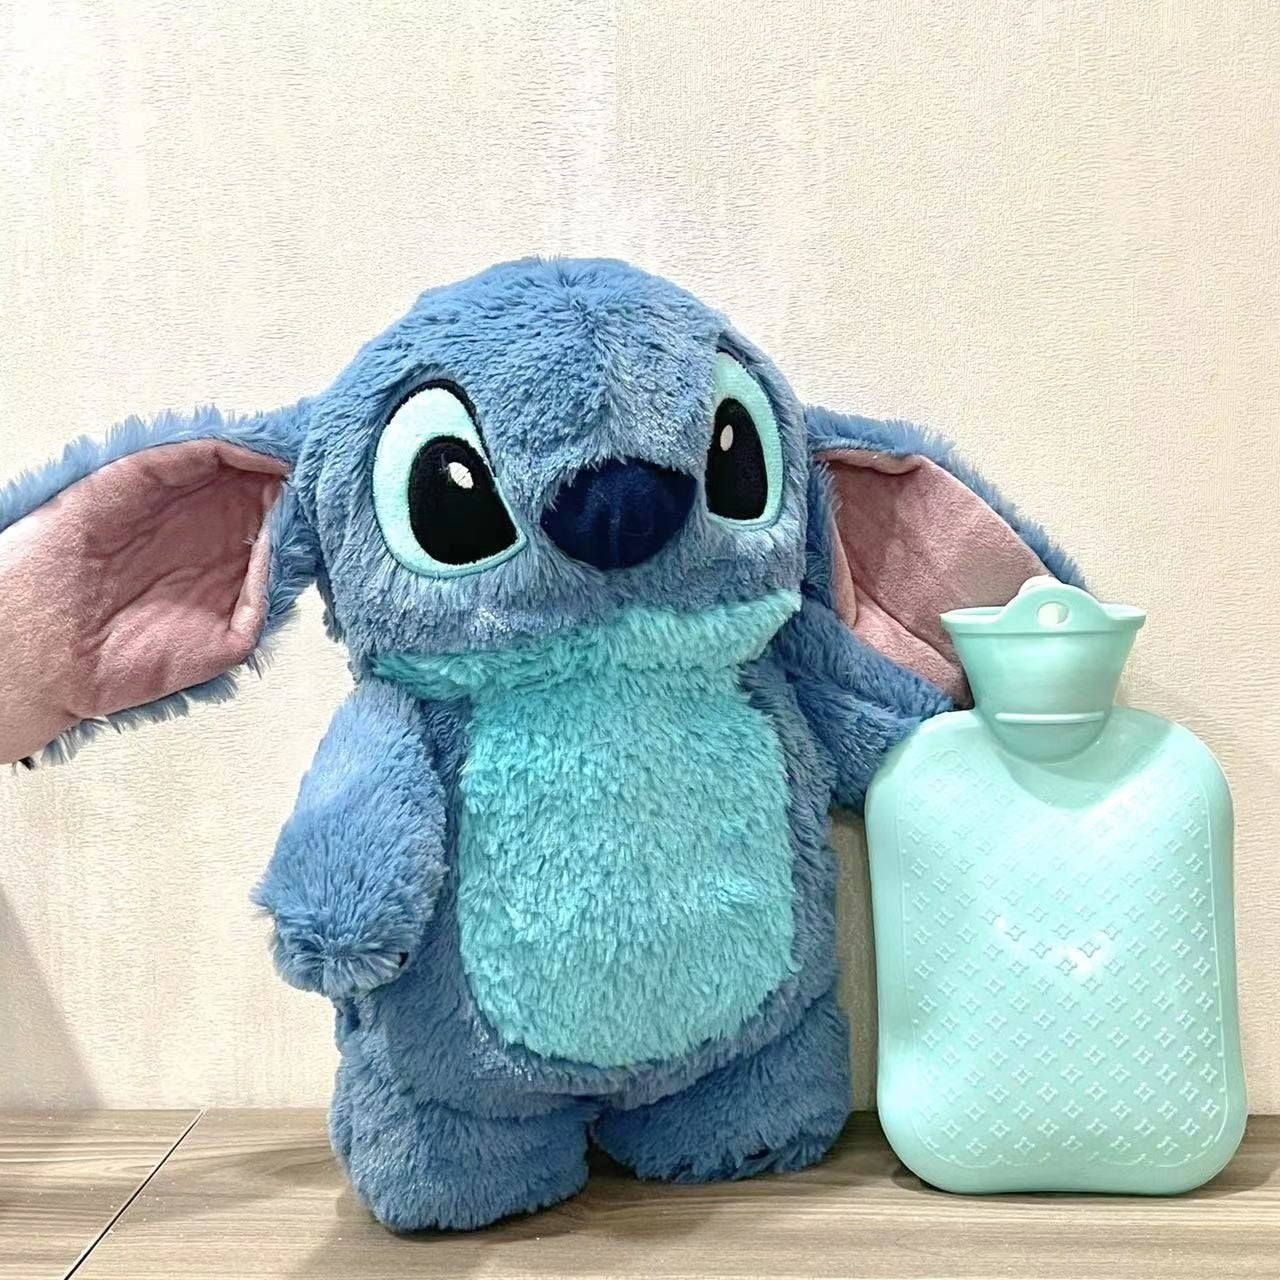 Botella Térmica Stitch - Lilo & Stitch